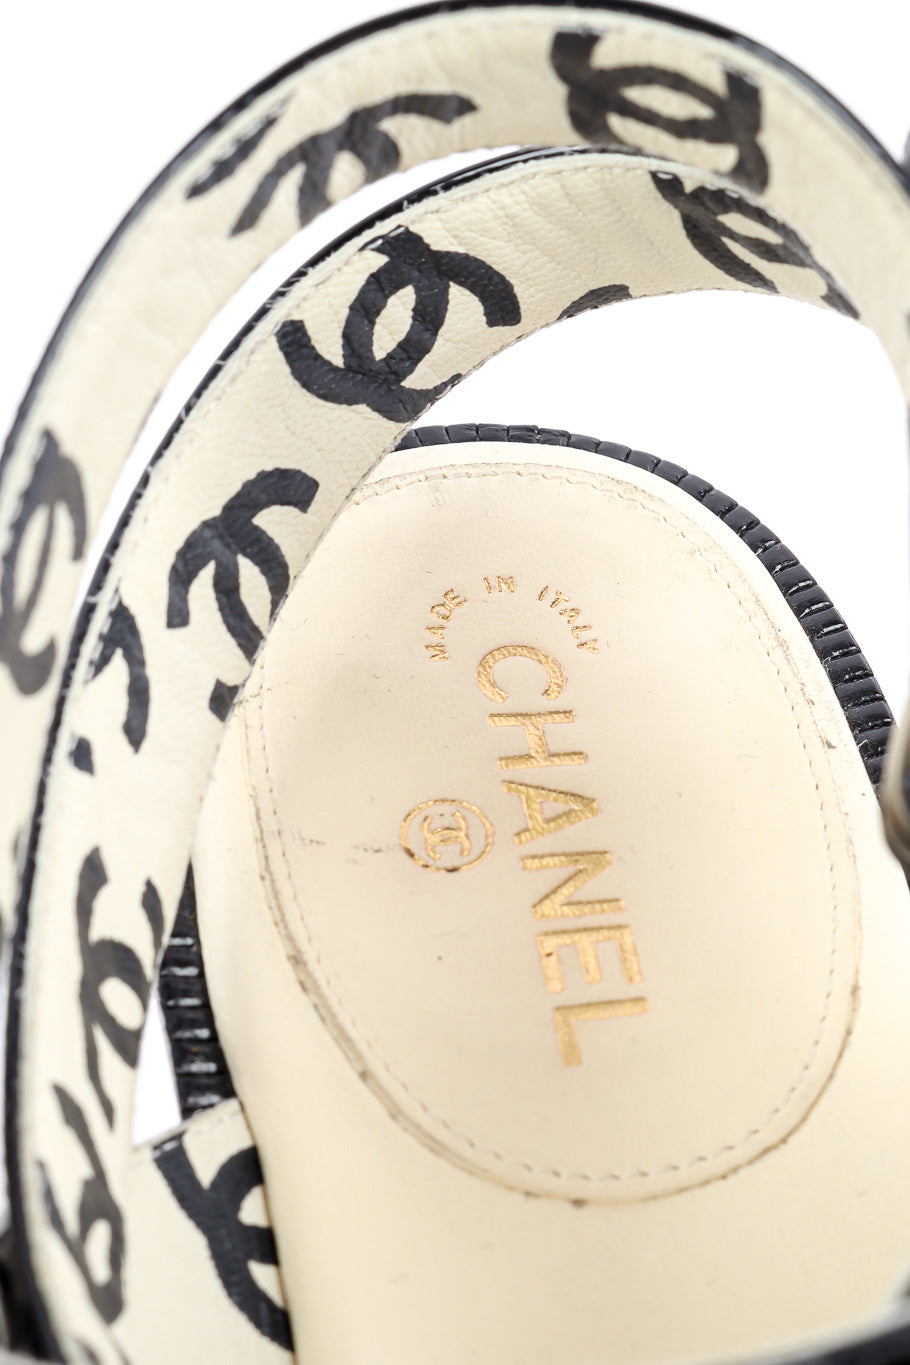 Chanel patent leather wrap sandal designer monogram @recessla